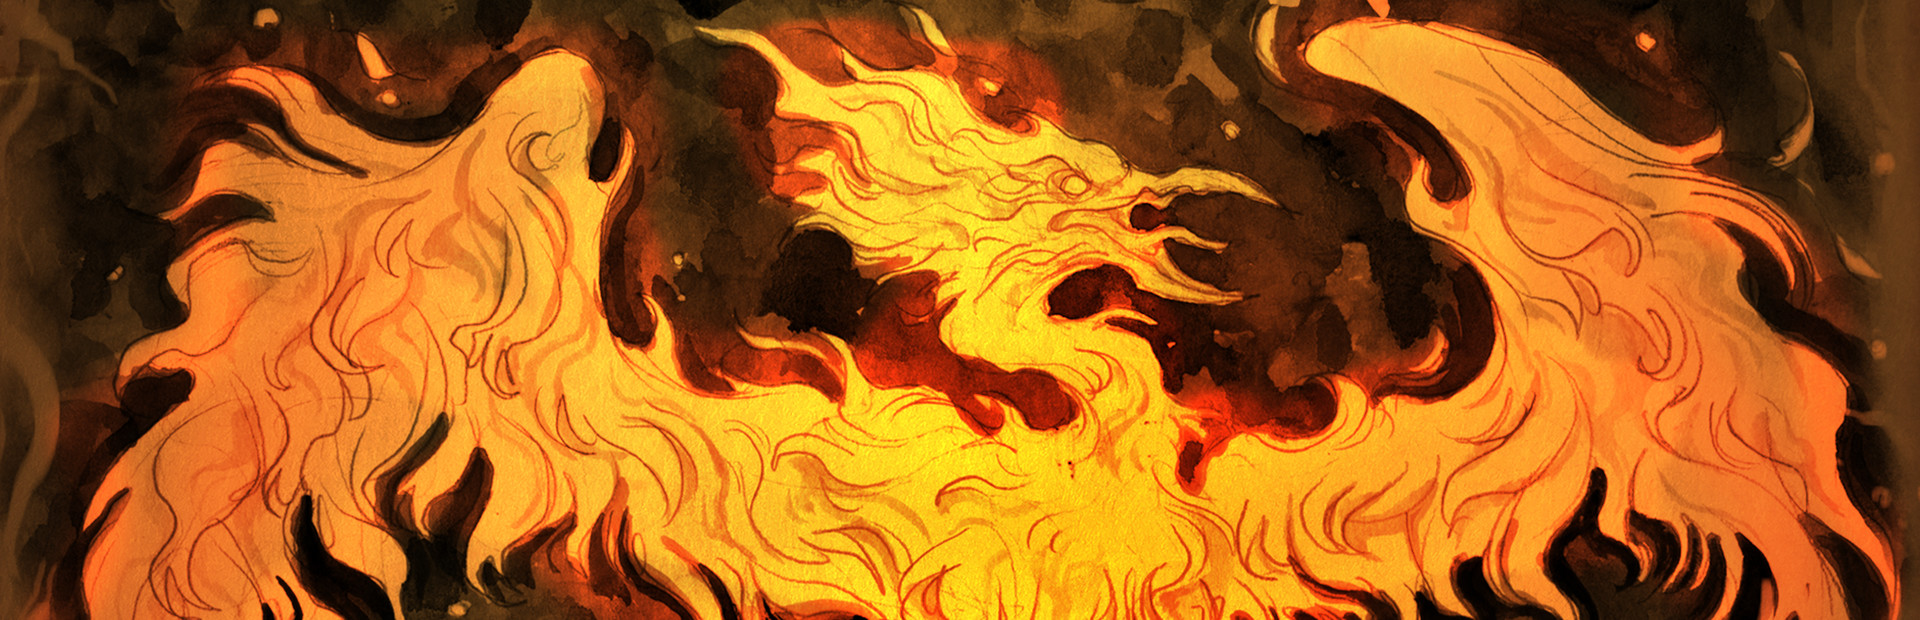 Flamebreak cover image